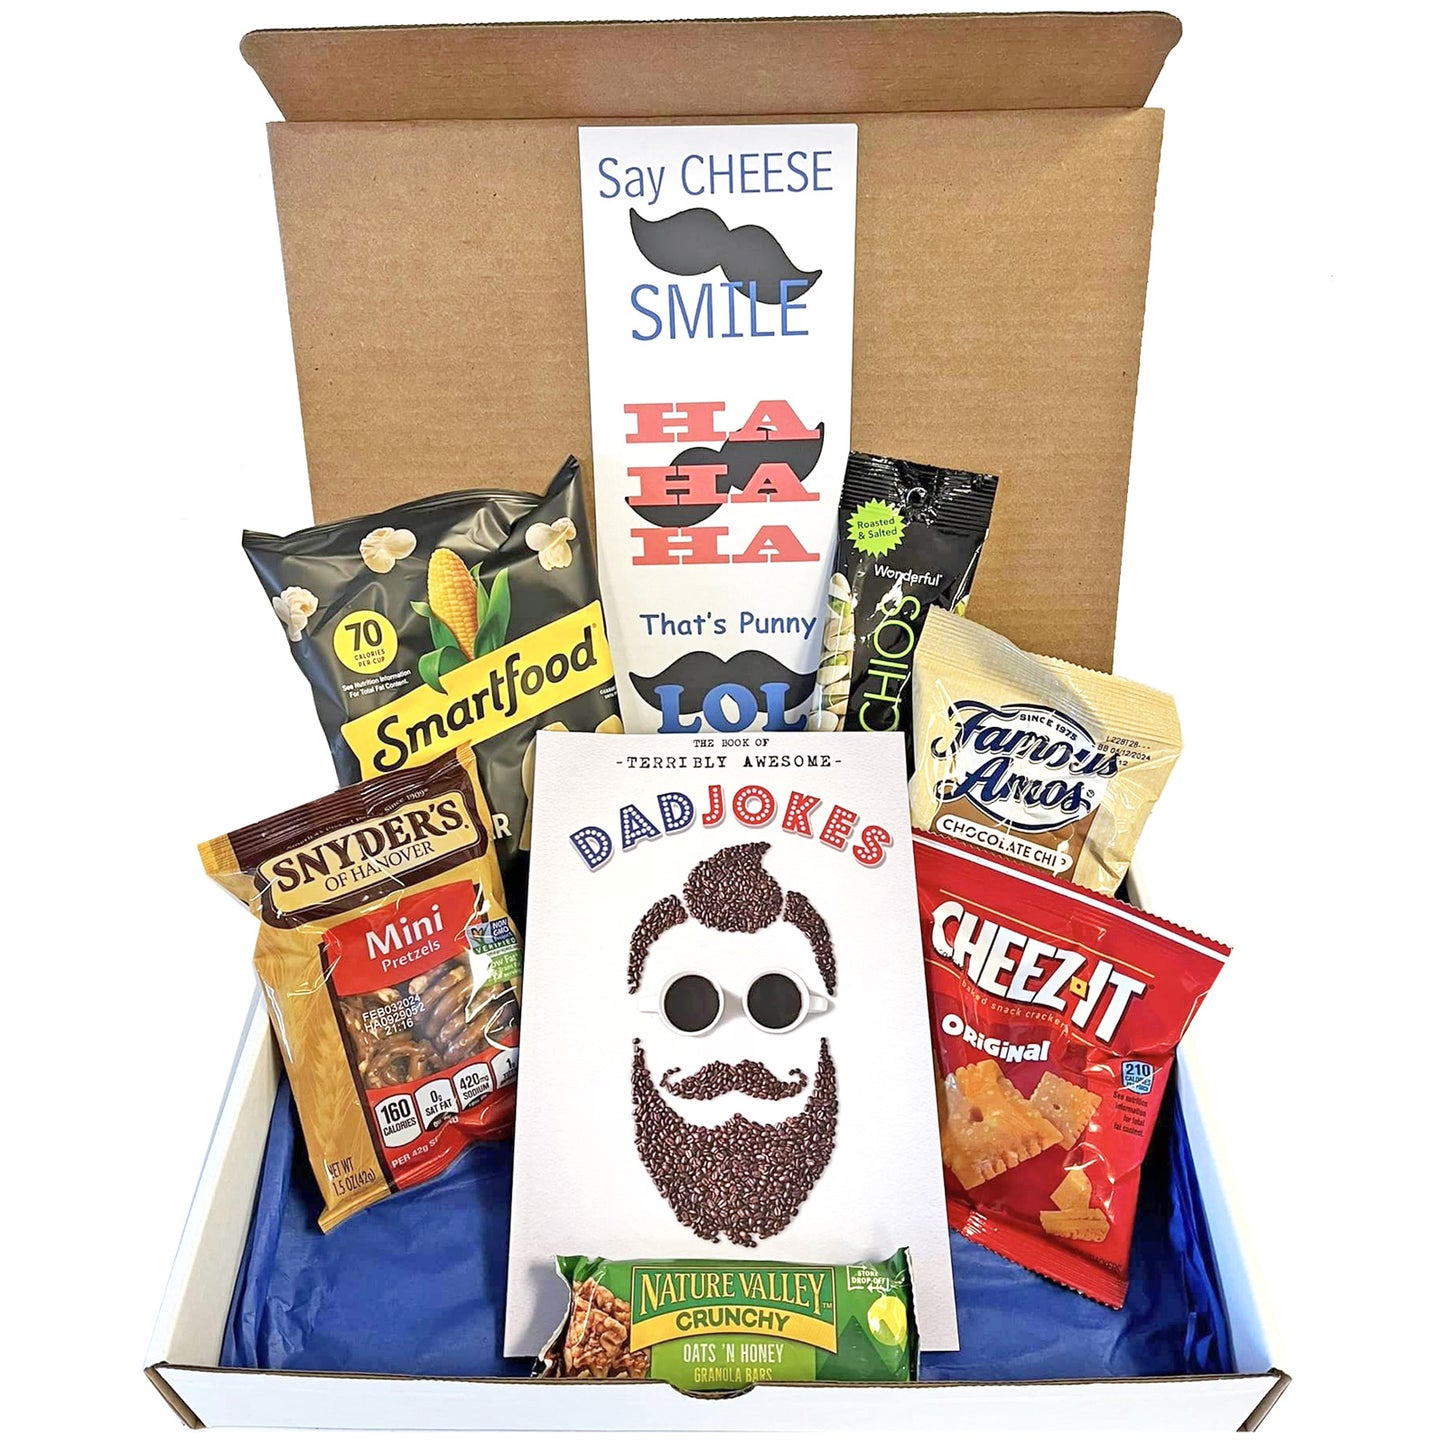 Dad Jokes Birthday Gift Box for Men Funny Men’s Birthday Gift with Joke Book and Snacks